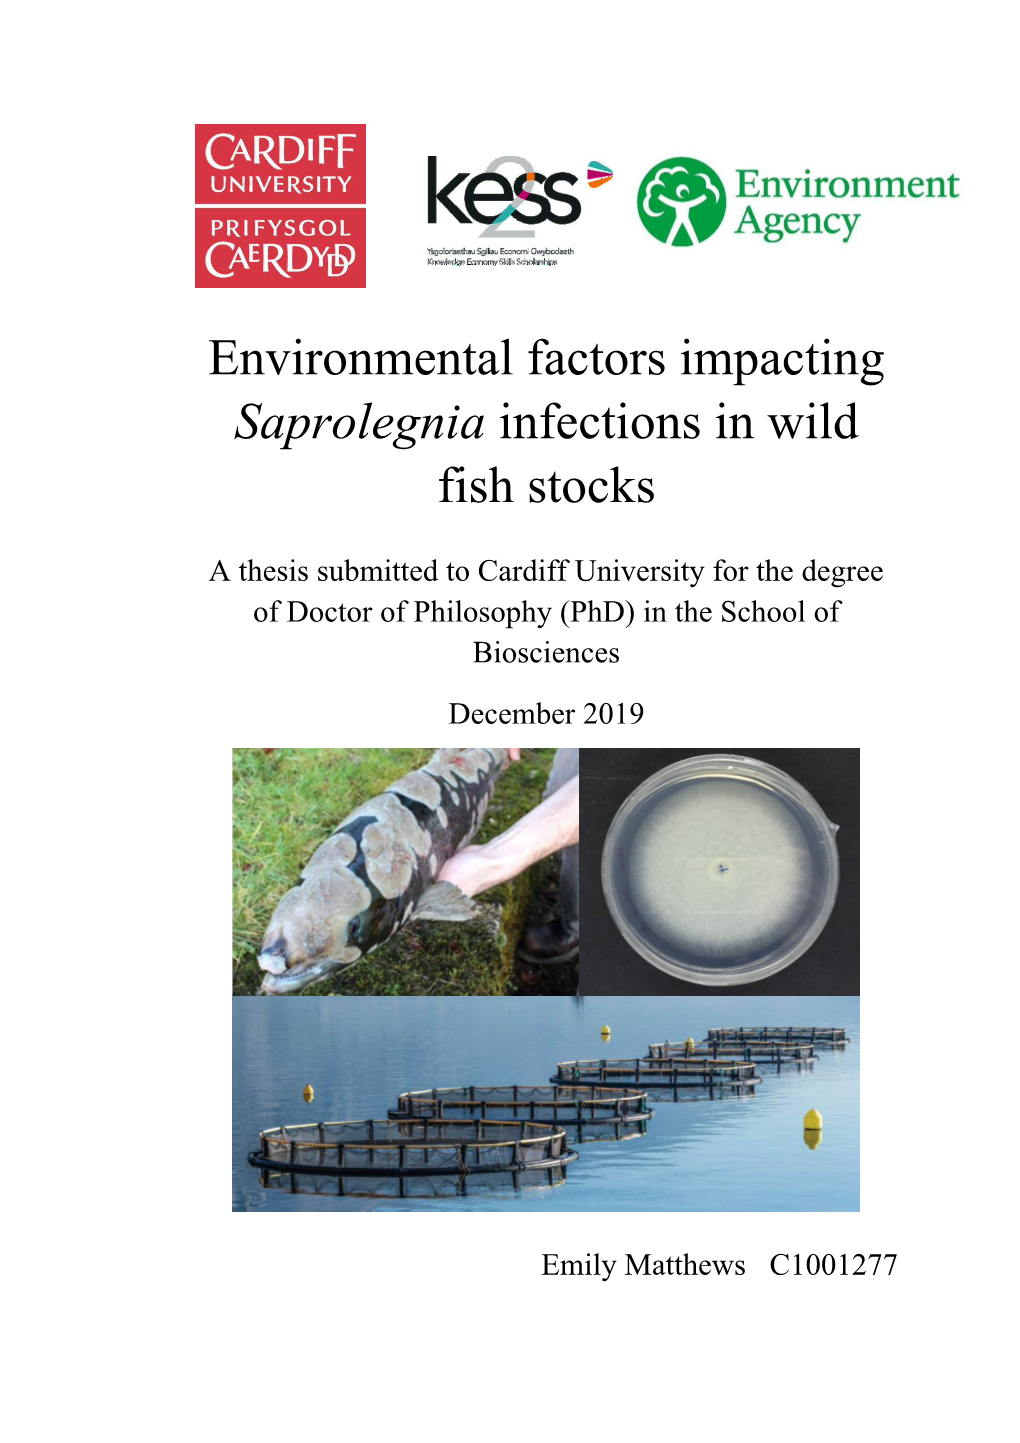 Environmental Factors Impacting Saprolegnia Infections in Wild Fish